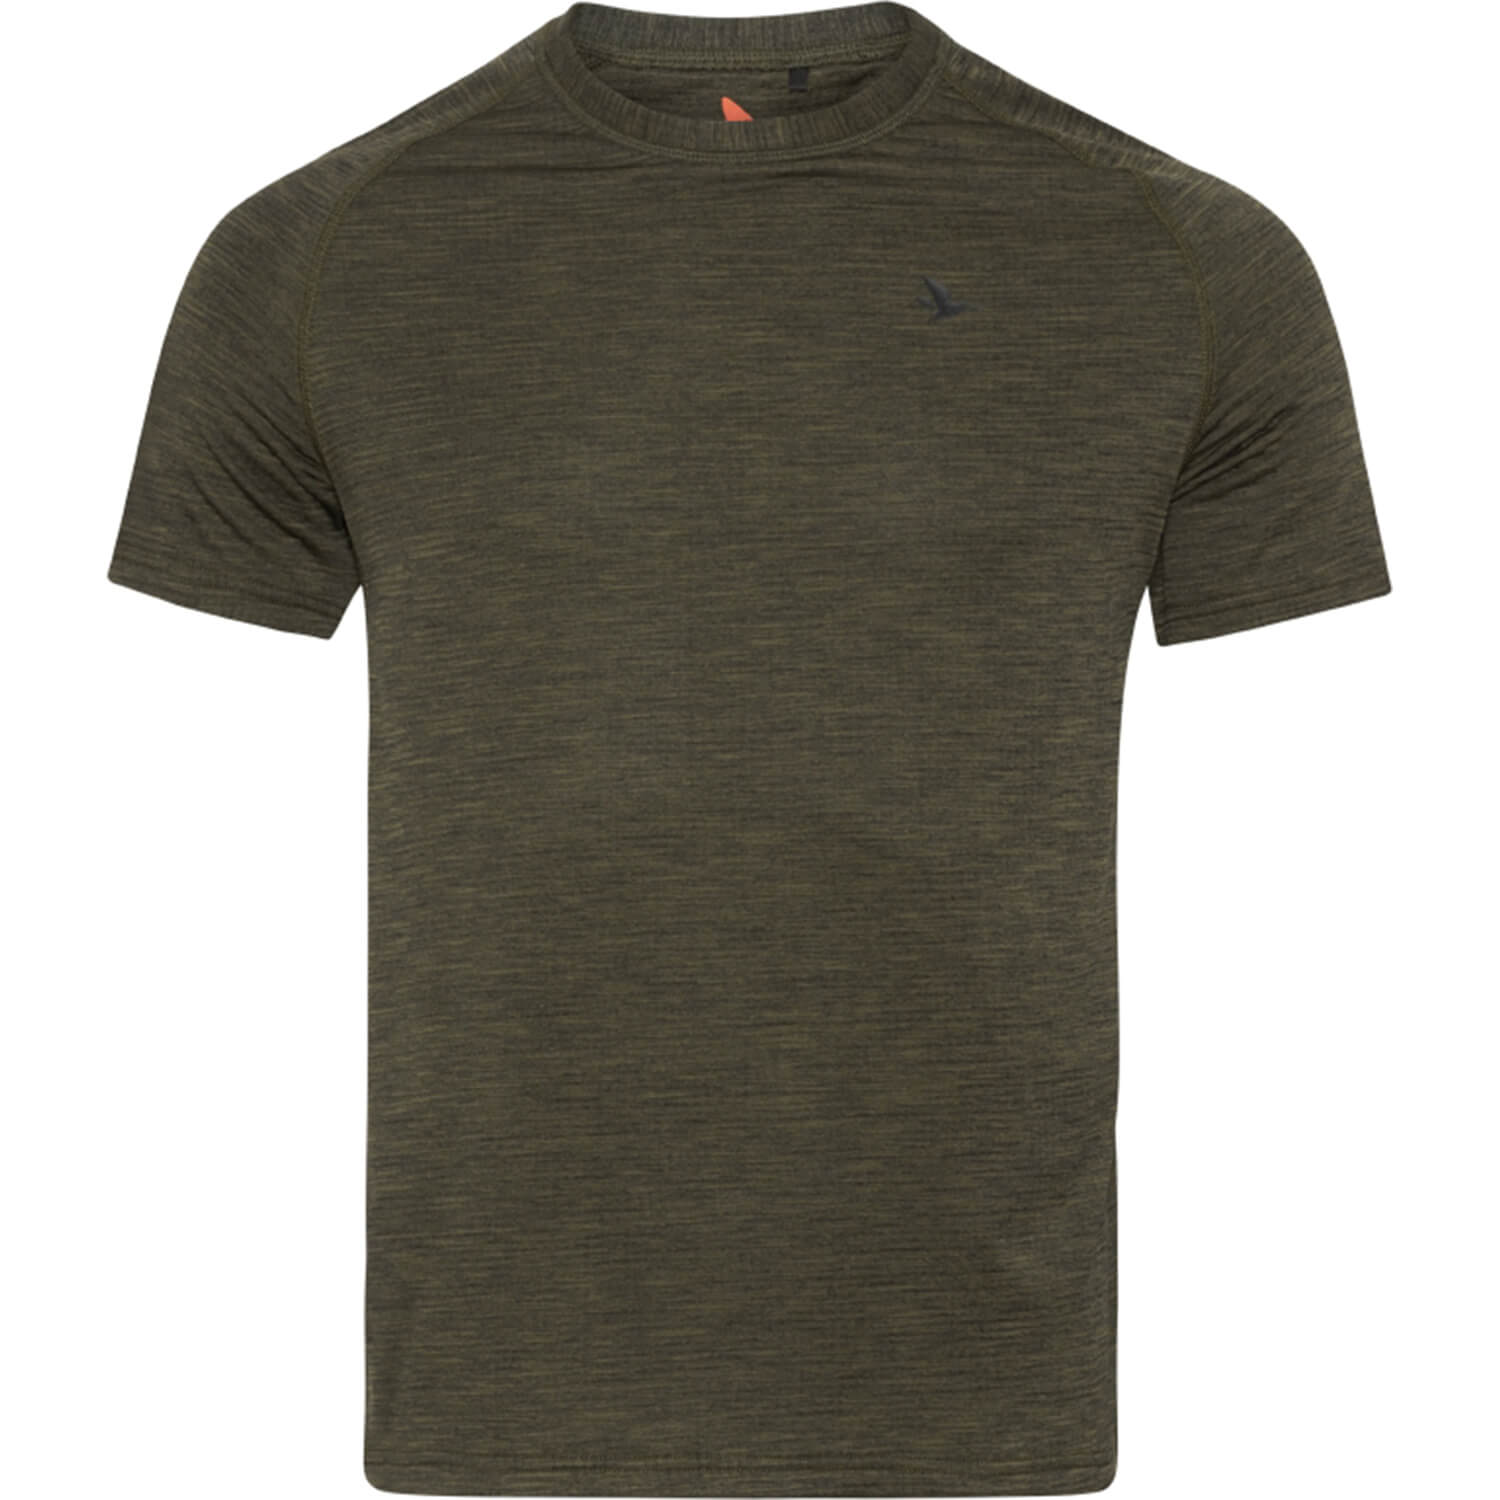 Seeland T-Shirt Active - Sommer-Jagdbekleidung